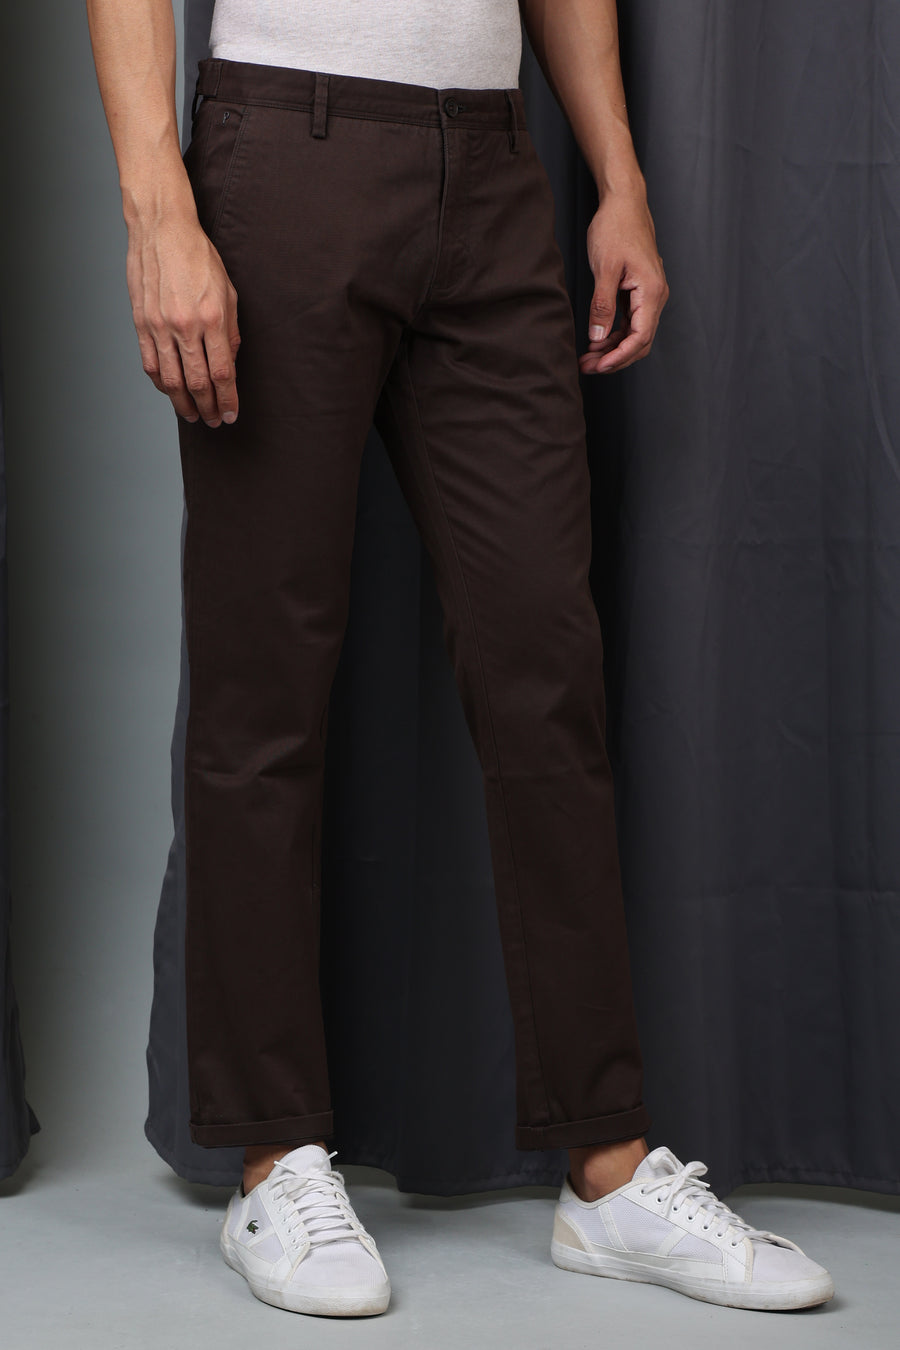 Torrento - Premium Strech Trouser - Brown